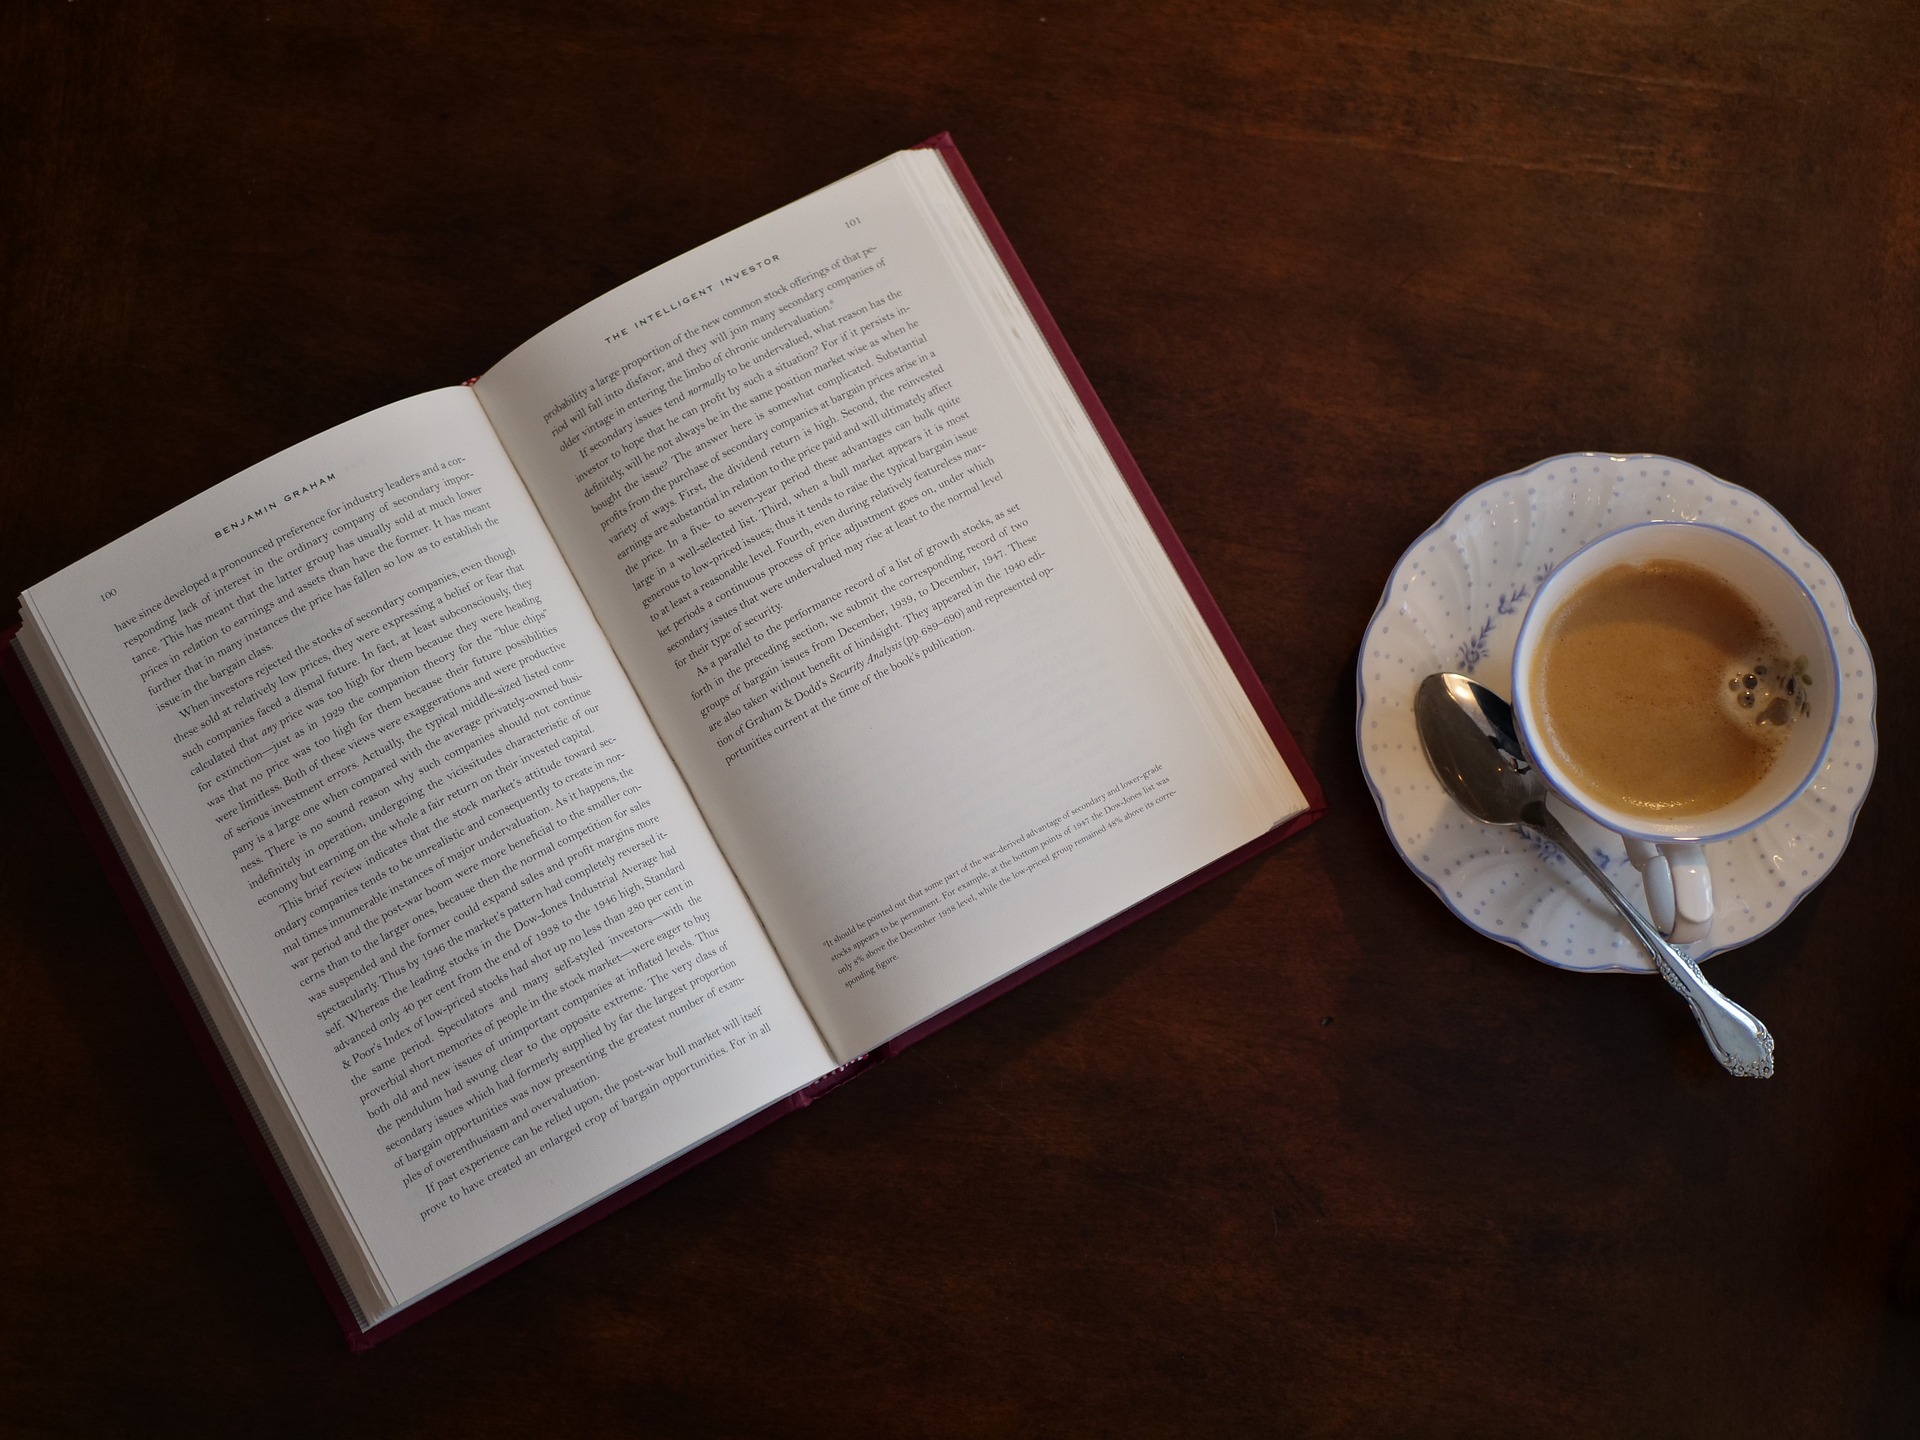 Membangun Kebiasaan Membaca, Rekomendasi Novel Bahasa Inggris Pendek dan Ringan untuk Pemula